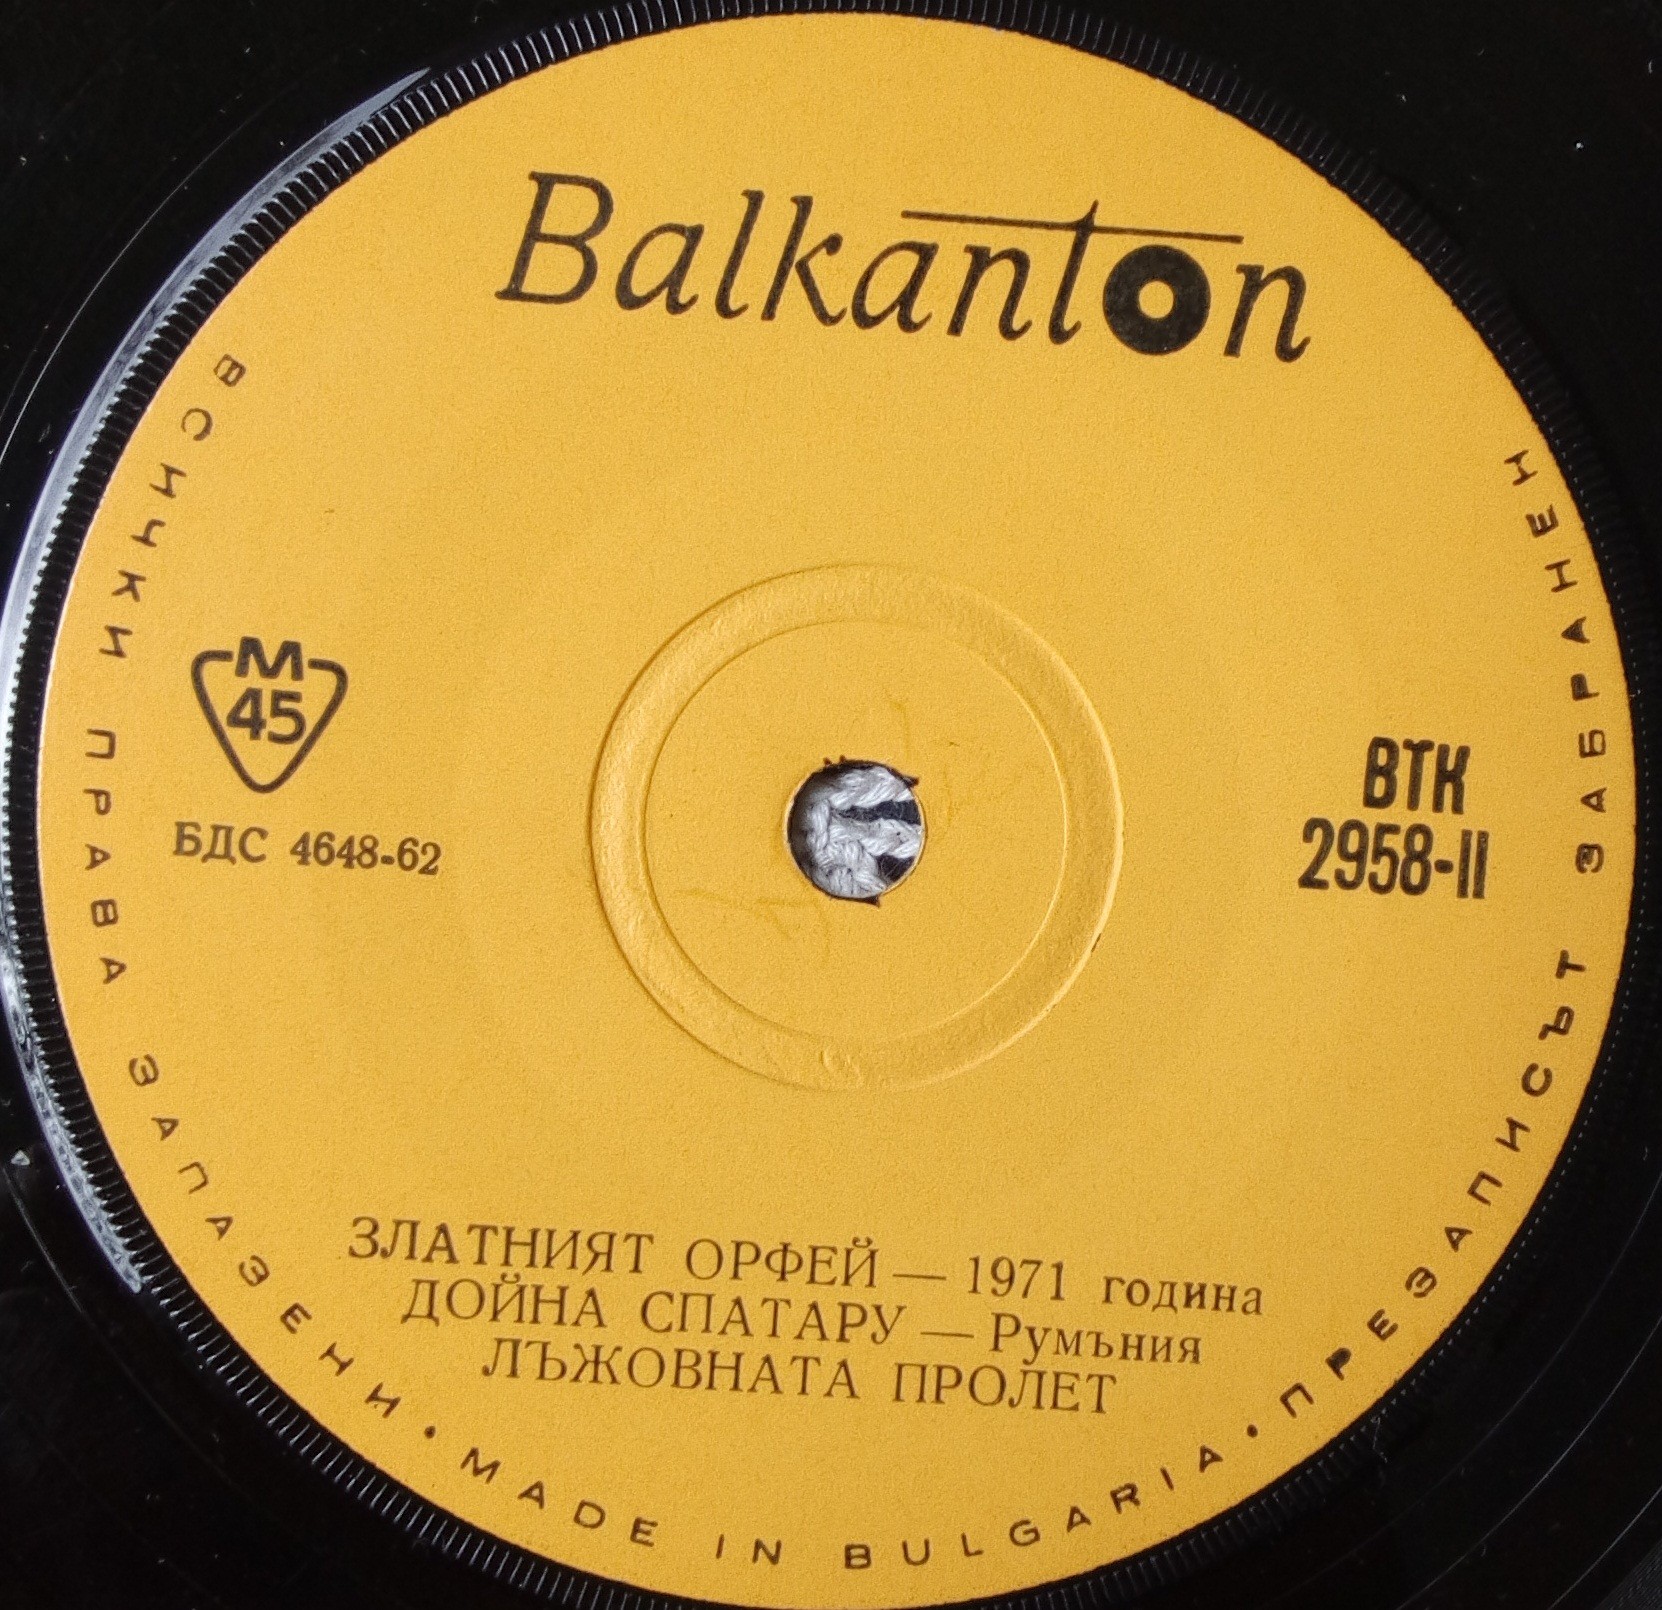 Златният Орфей - 1971 година. Пее Дойна Спатару (Румъния)